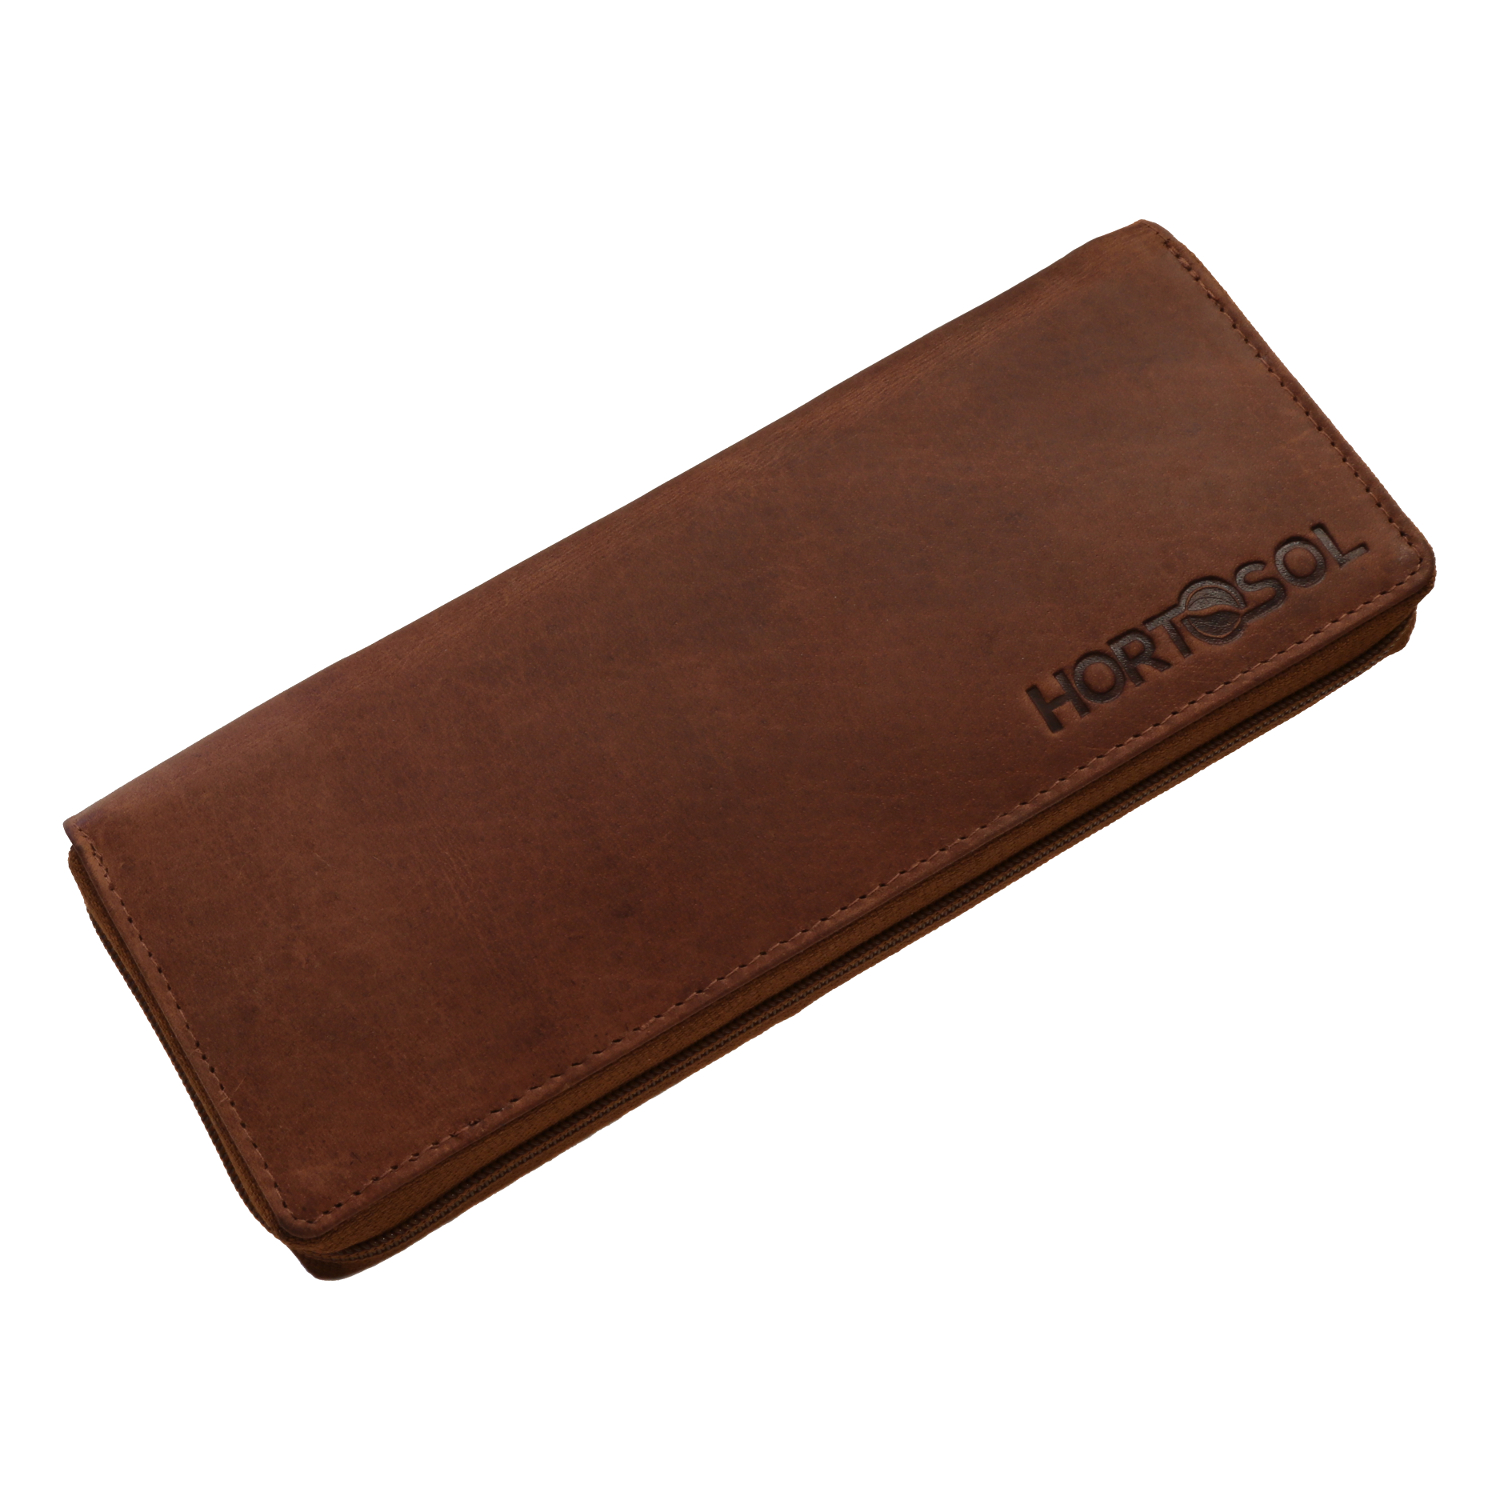 HORTOSOL HAVANNA Genuine leather pouch Purse brown Cig Case Rolling Kit 